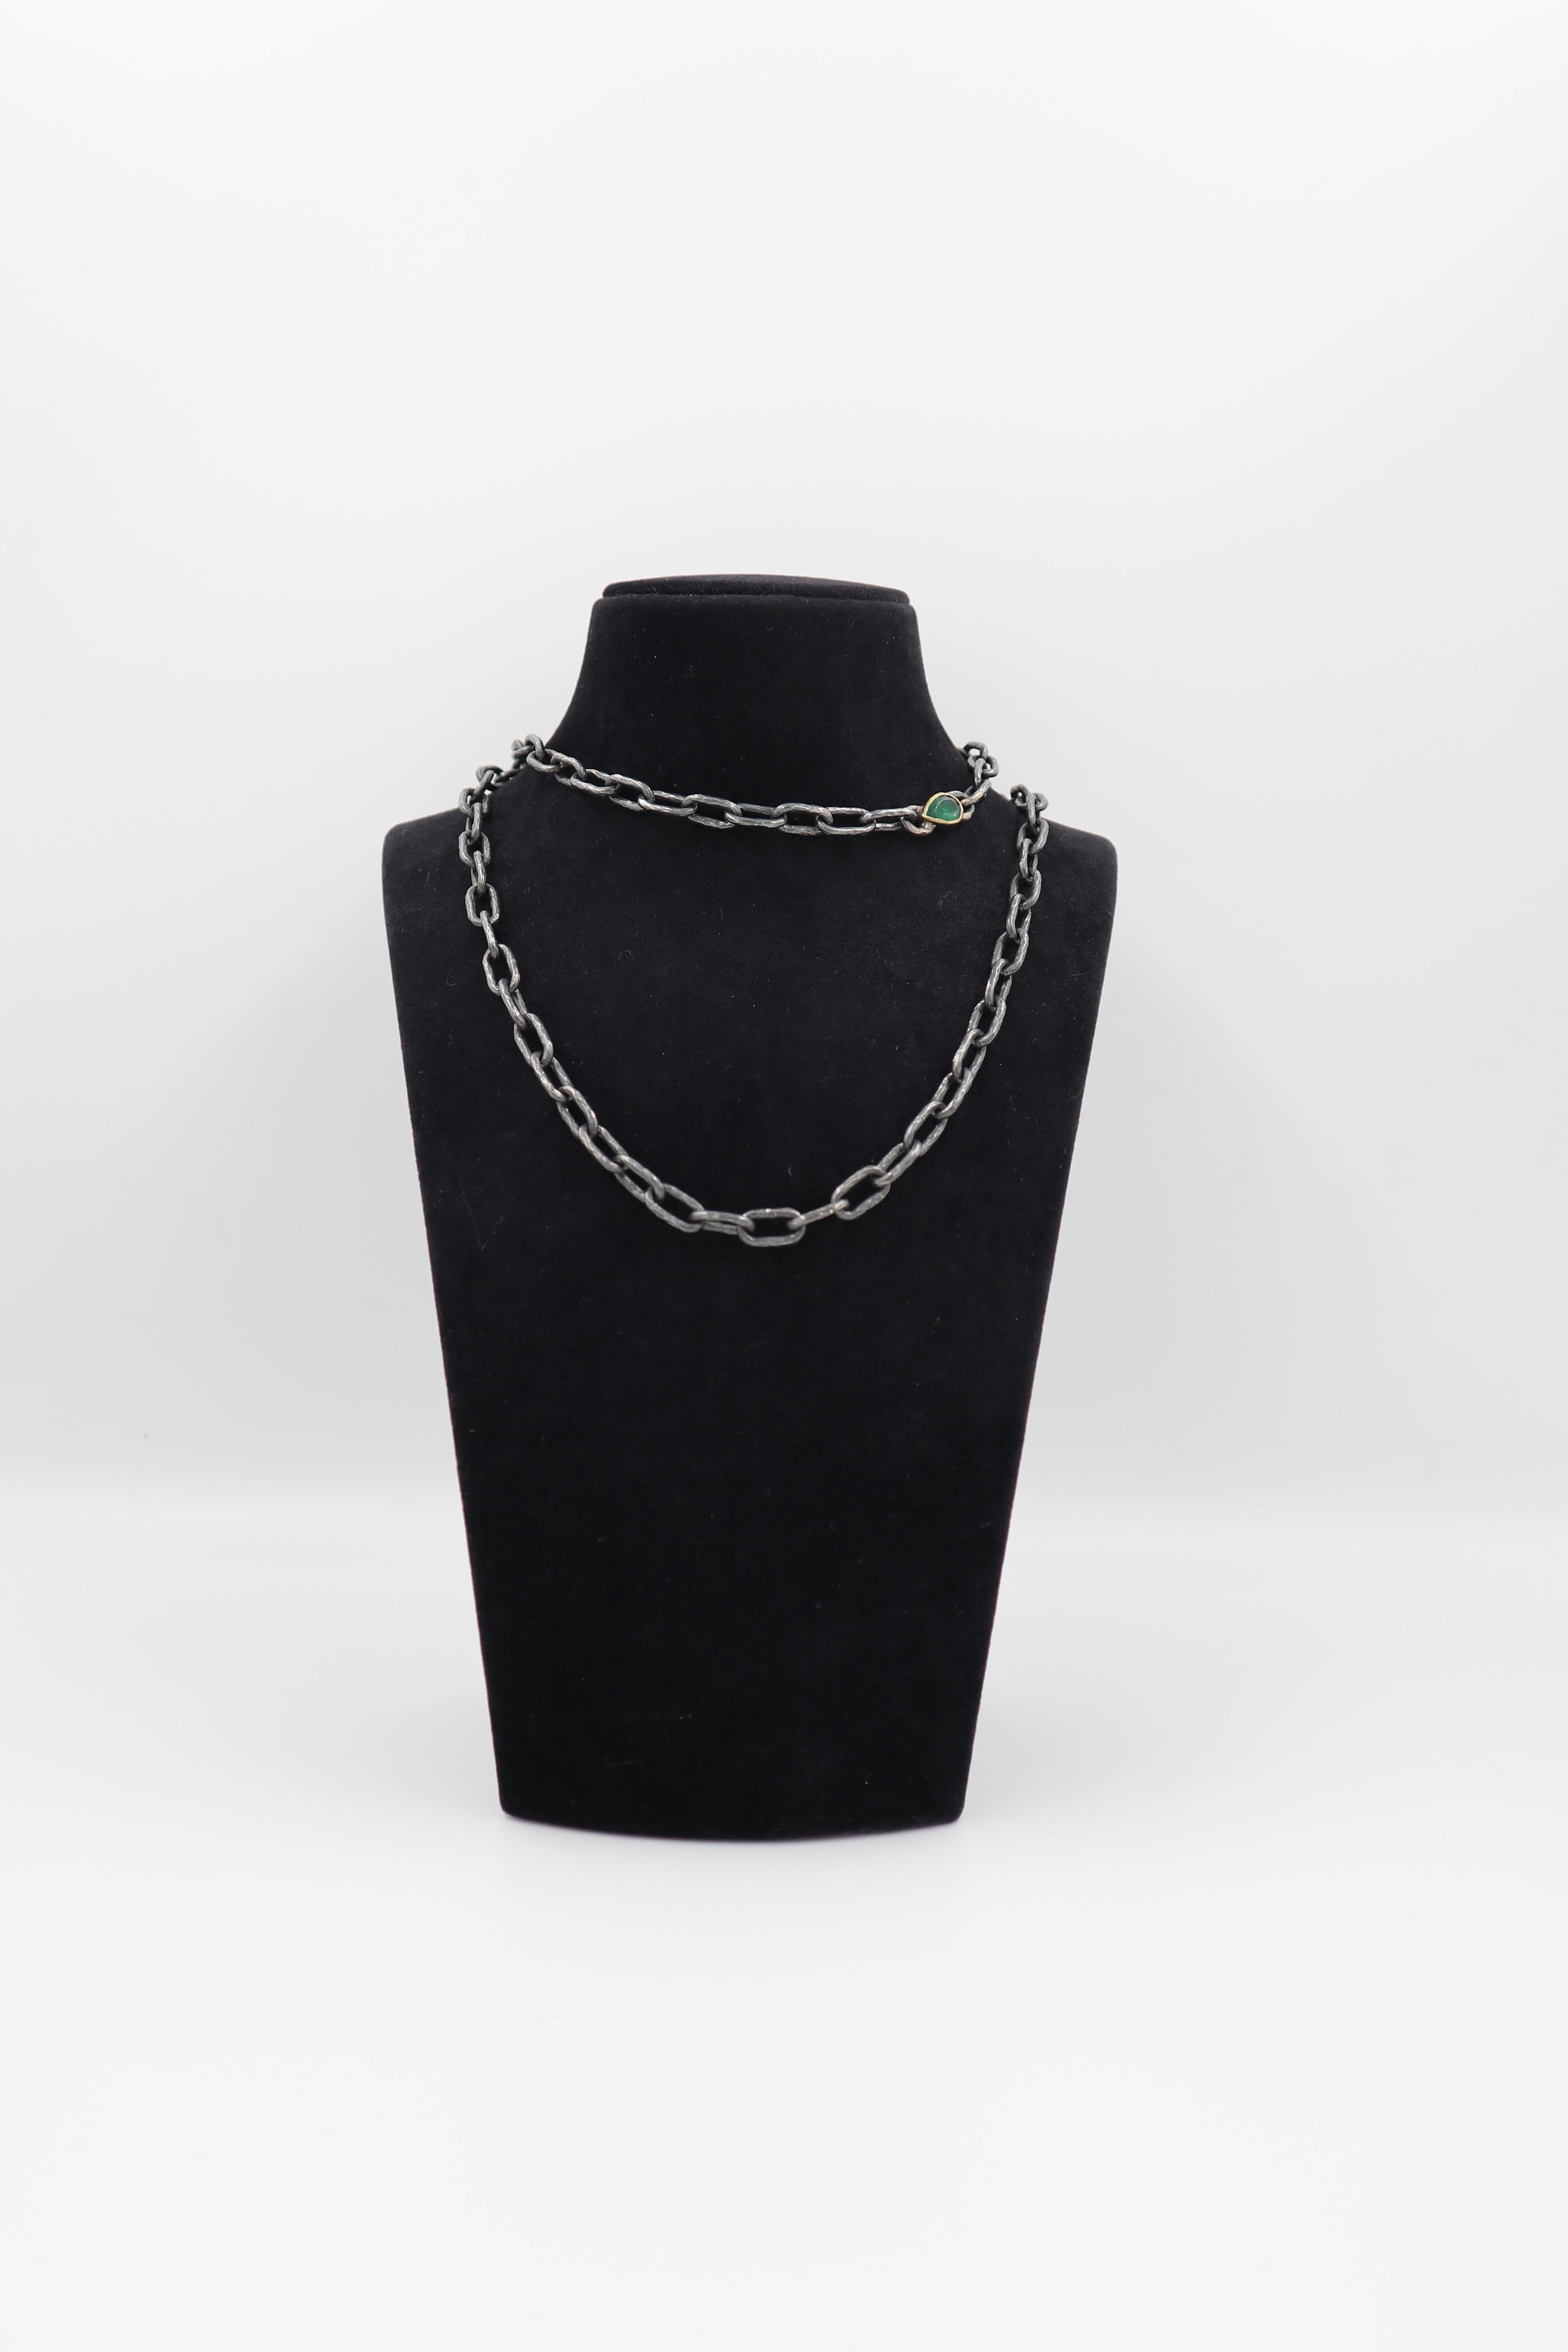 Smaragd Oxidiertes Silber 24K Mikron versilberte Kettenhemd Halskette (Smaragdschliff) im Angebot